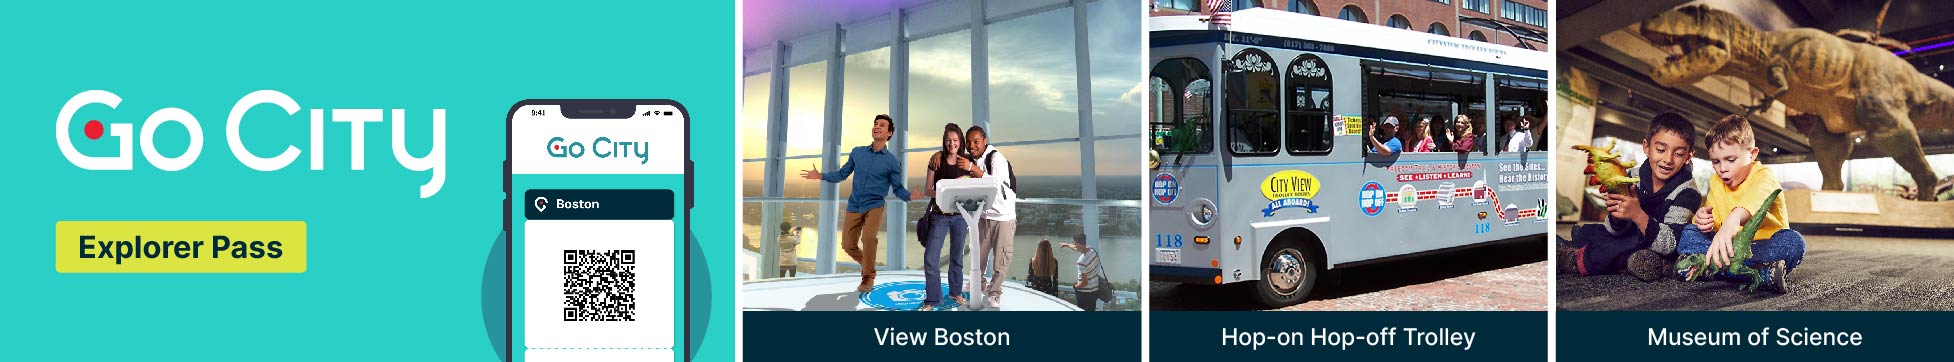 Go City | Boston Explorer Pass Header Image